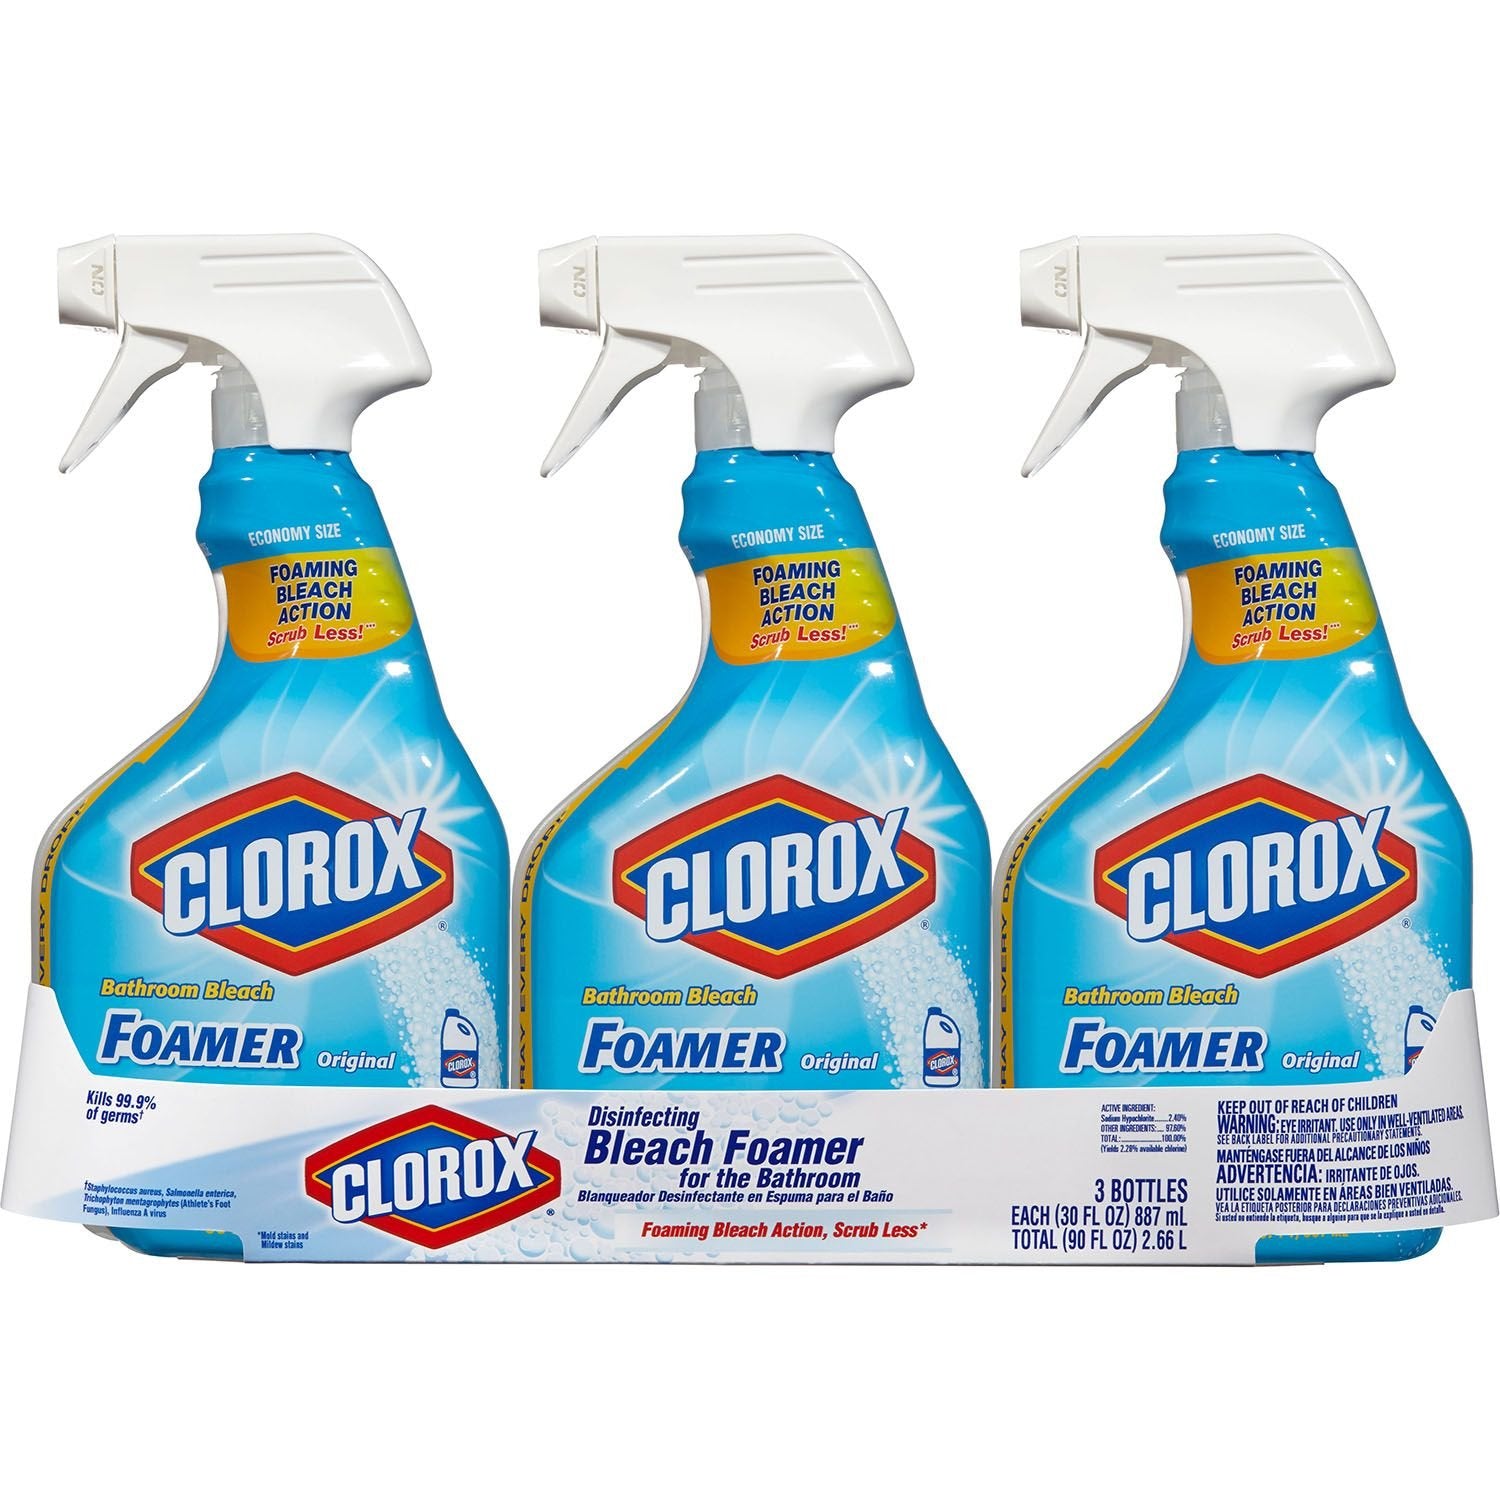 Clorox Bleach Foamer Bathroom Spray, 30 oz. Bottles